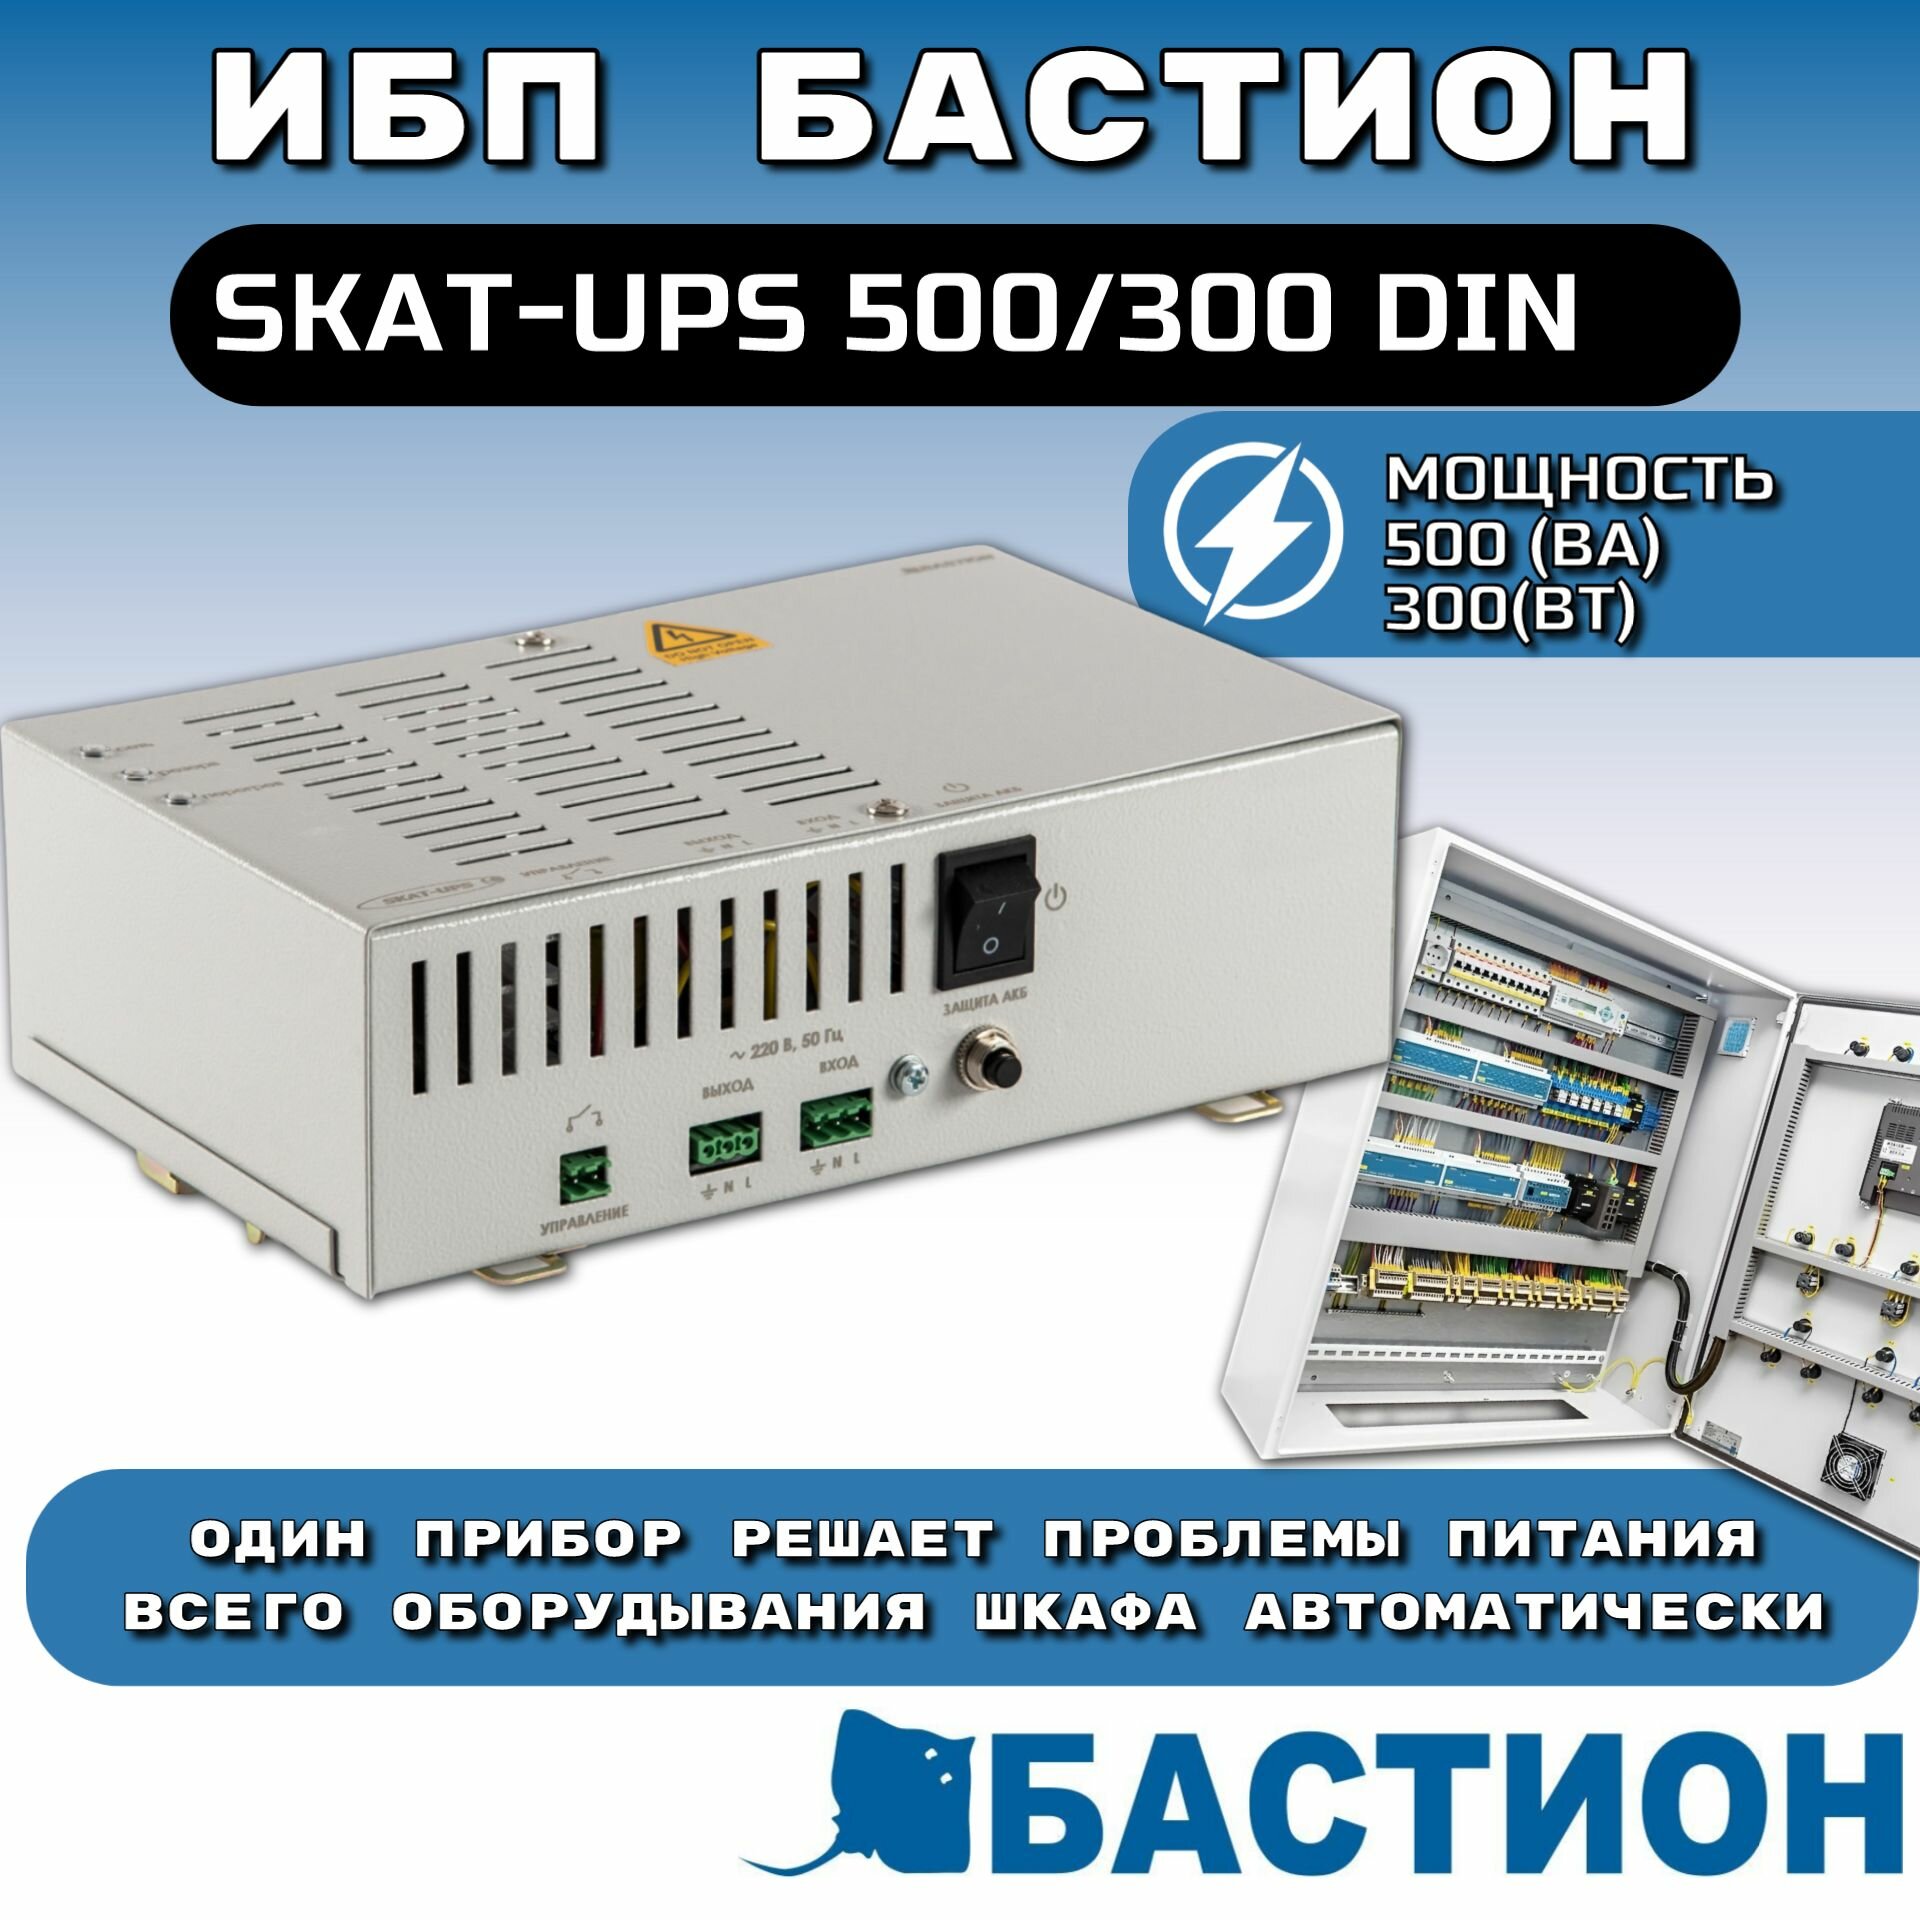 ИБП Бастион SKAT-UPS 500/300 DIN (451)